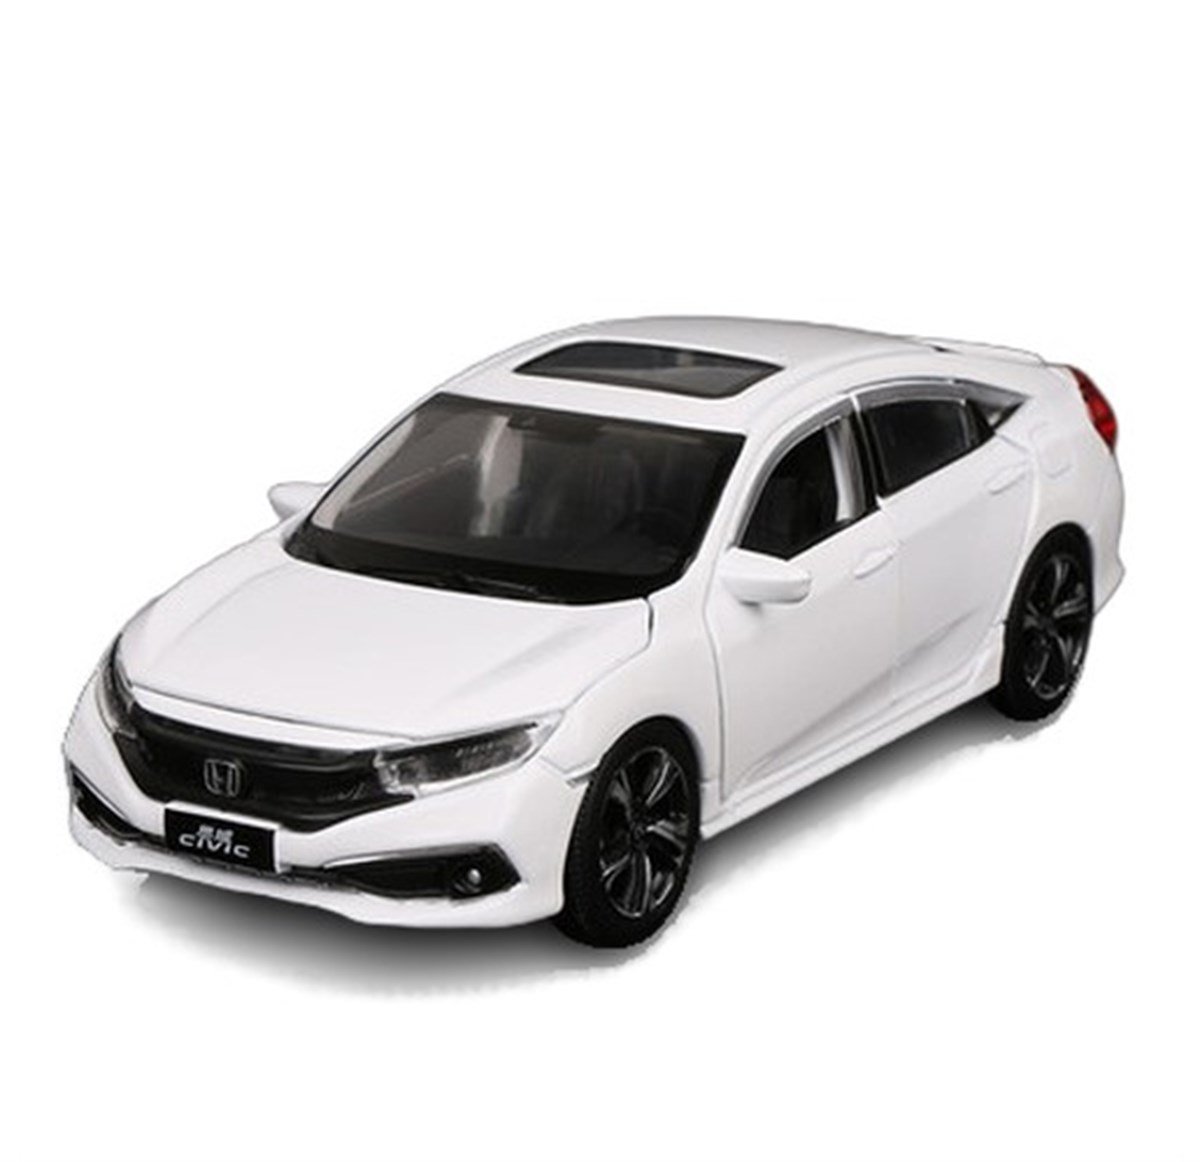 Tcherchi Honda Civic Model Oyuncak Araba - Beyaz